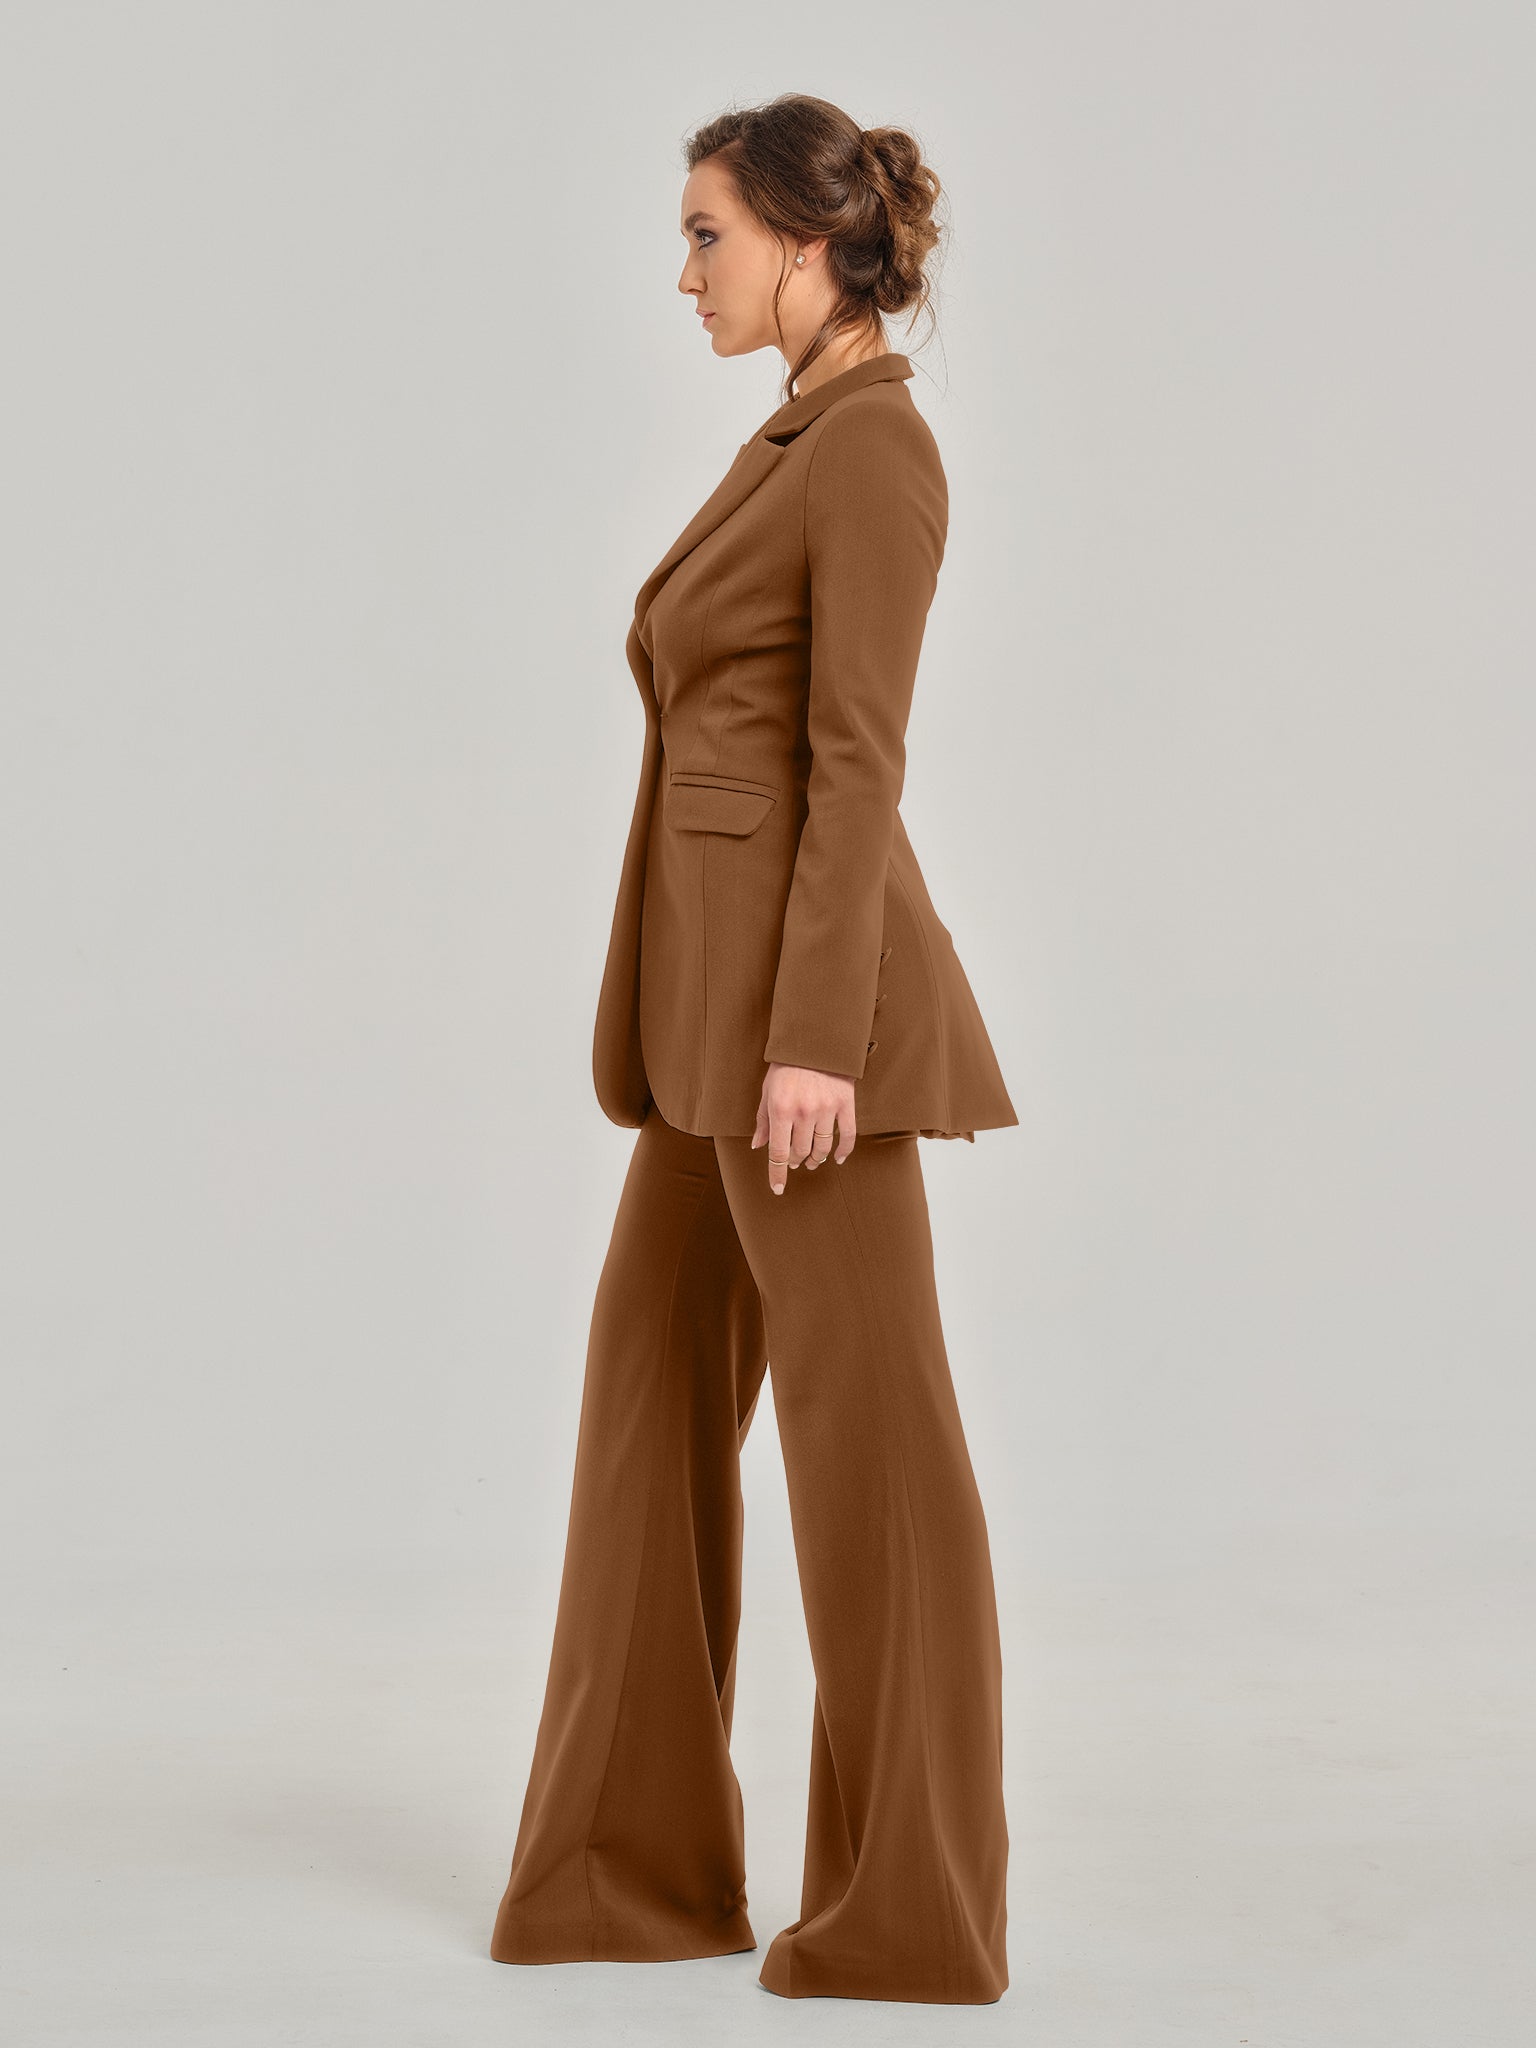 Warm Wishes High-Waist Flared Trousers by Tia Dorraine Women's Luxury Fashion Designer Clothing Brand